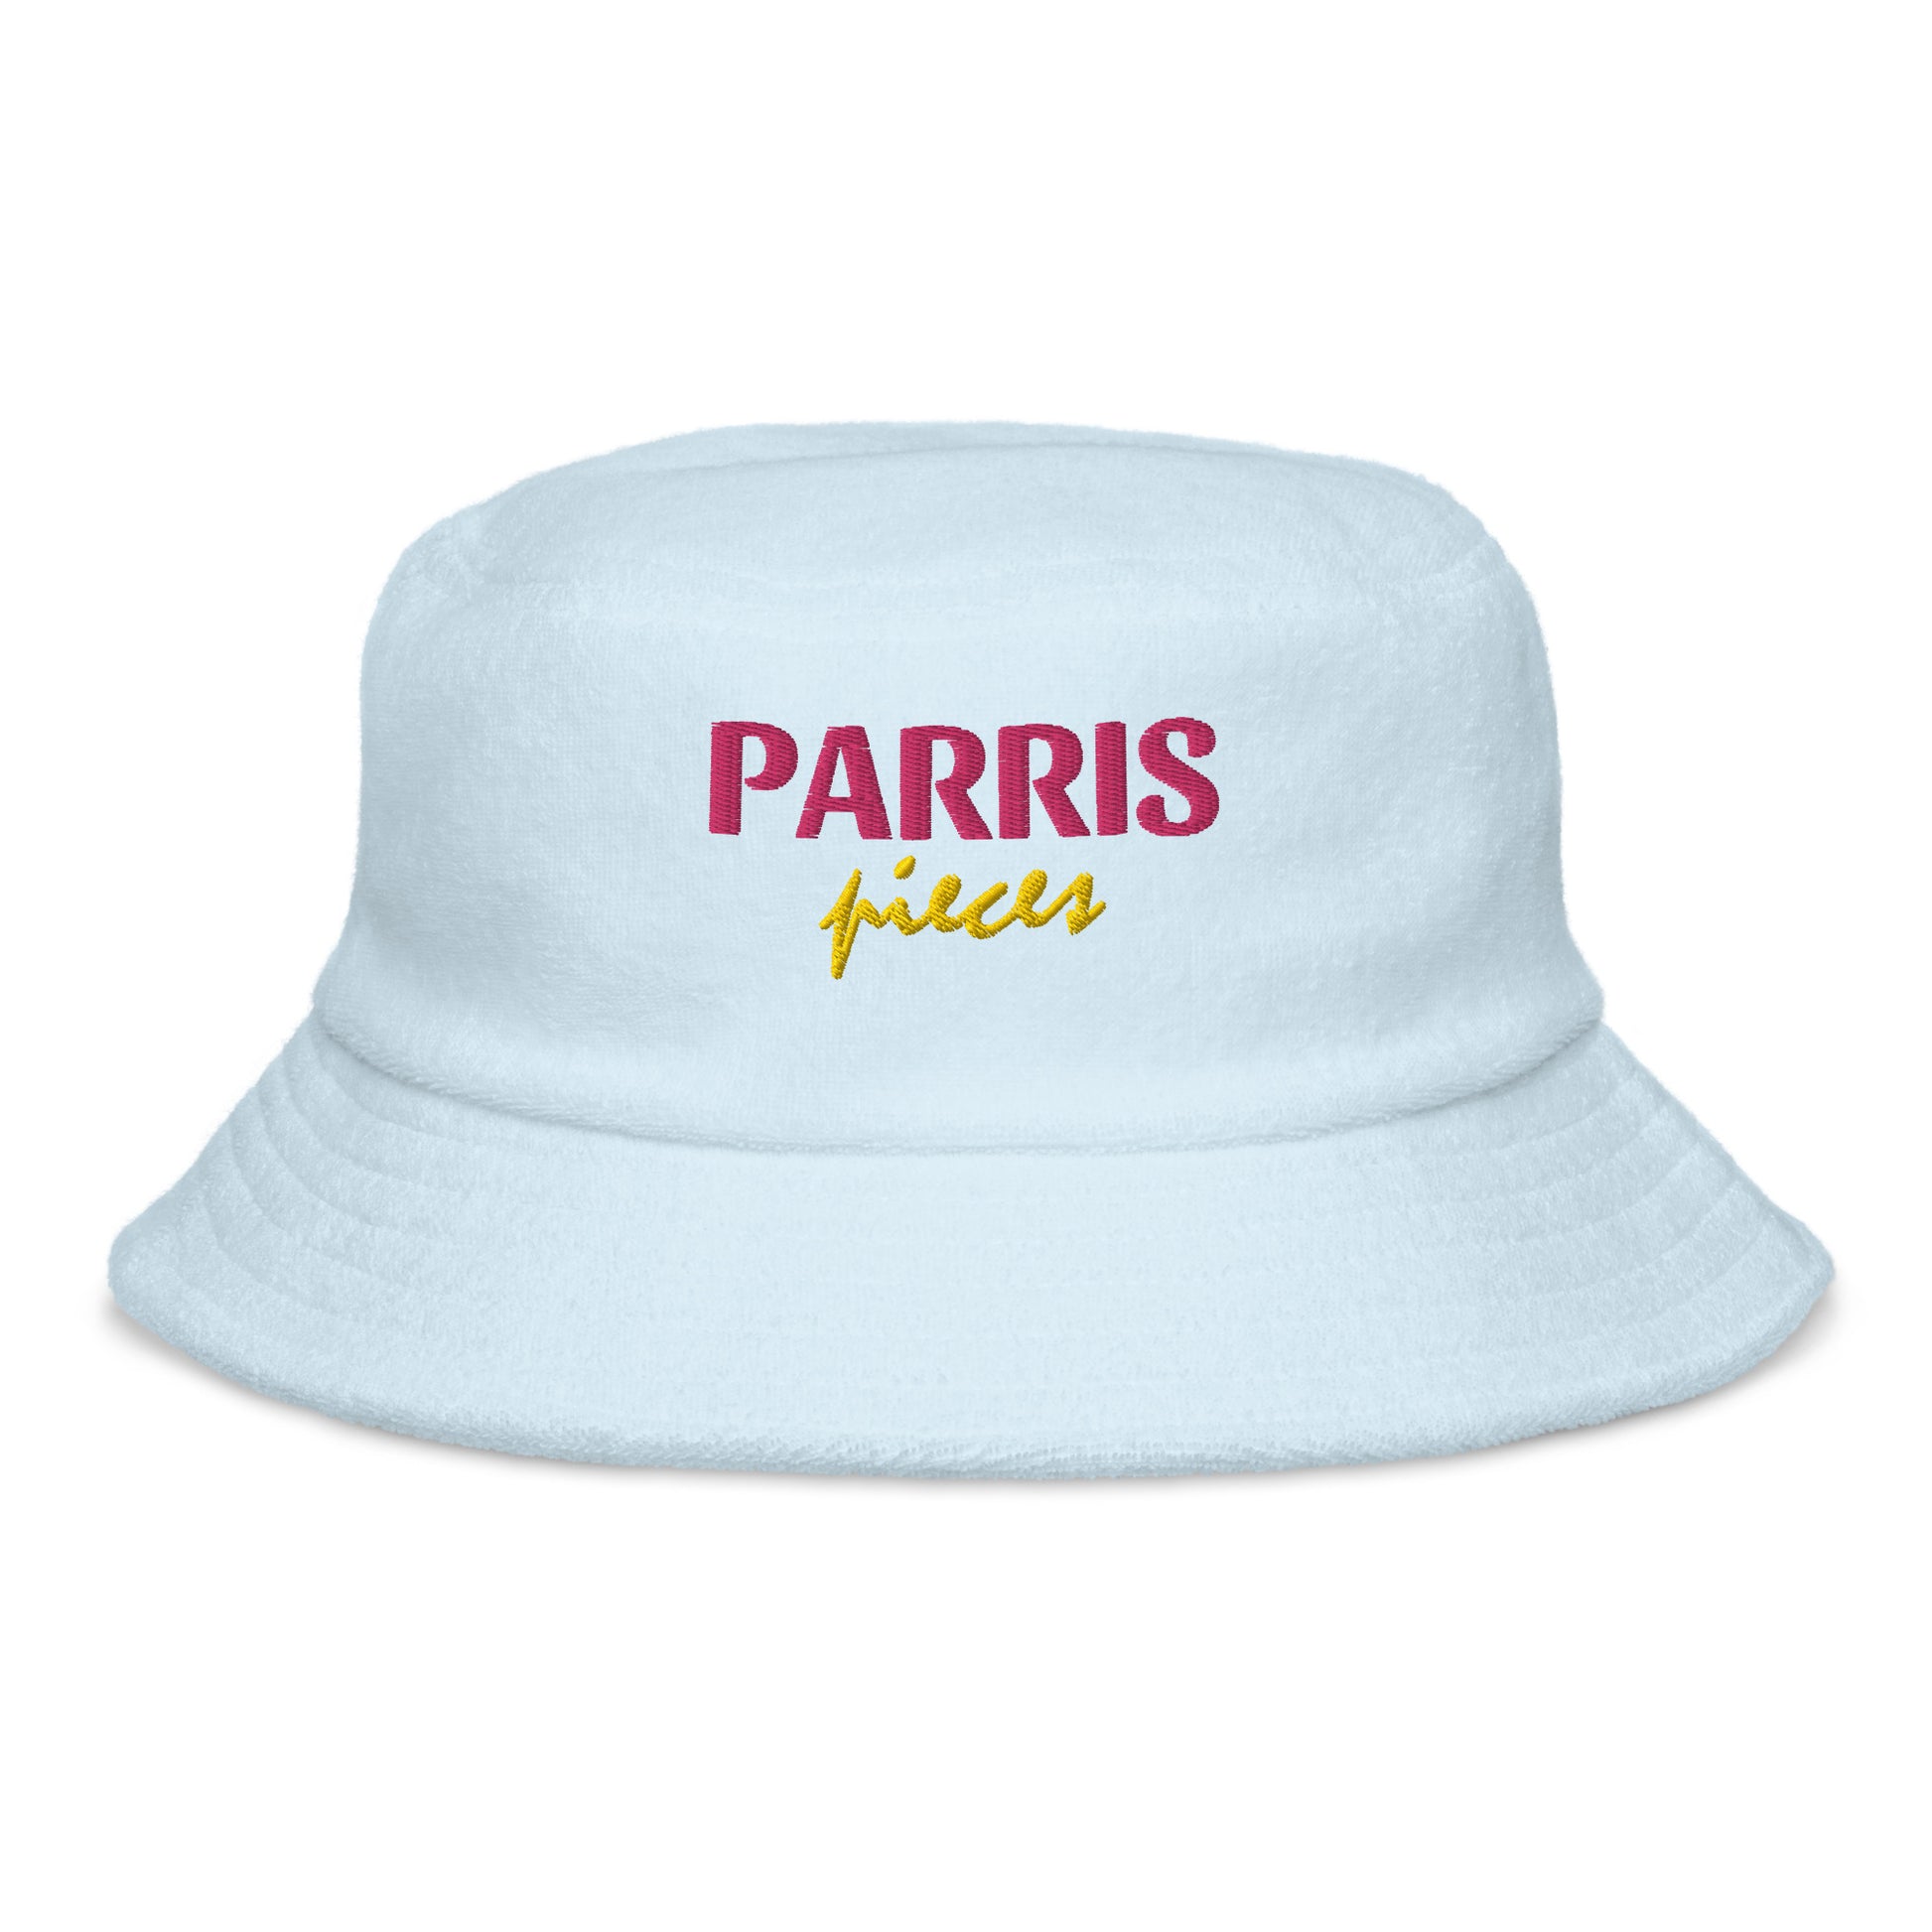 PARRISPIECES Terry Cloth Bucket Hat - ParrisPieces